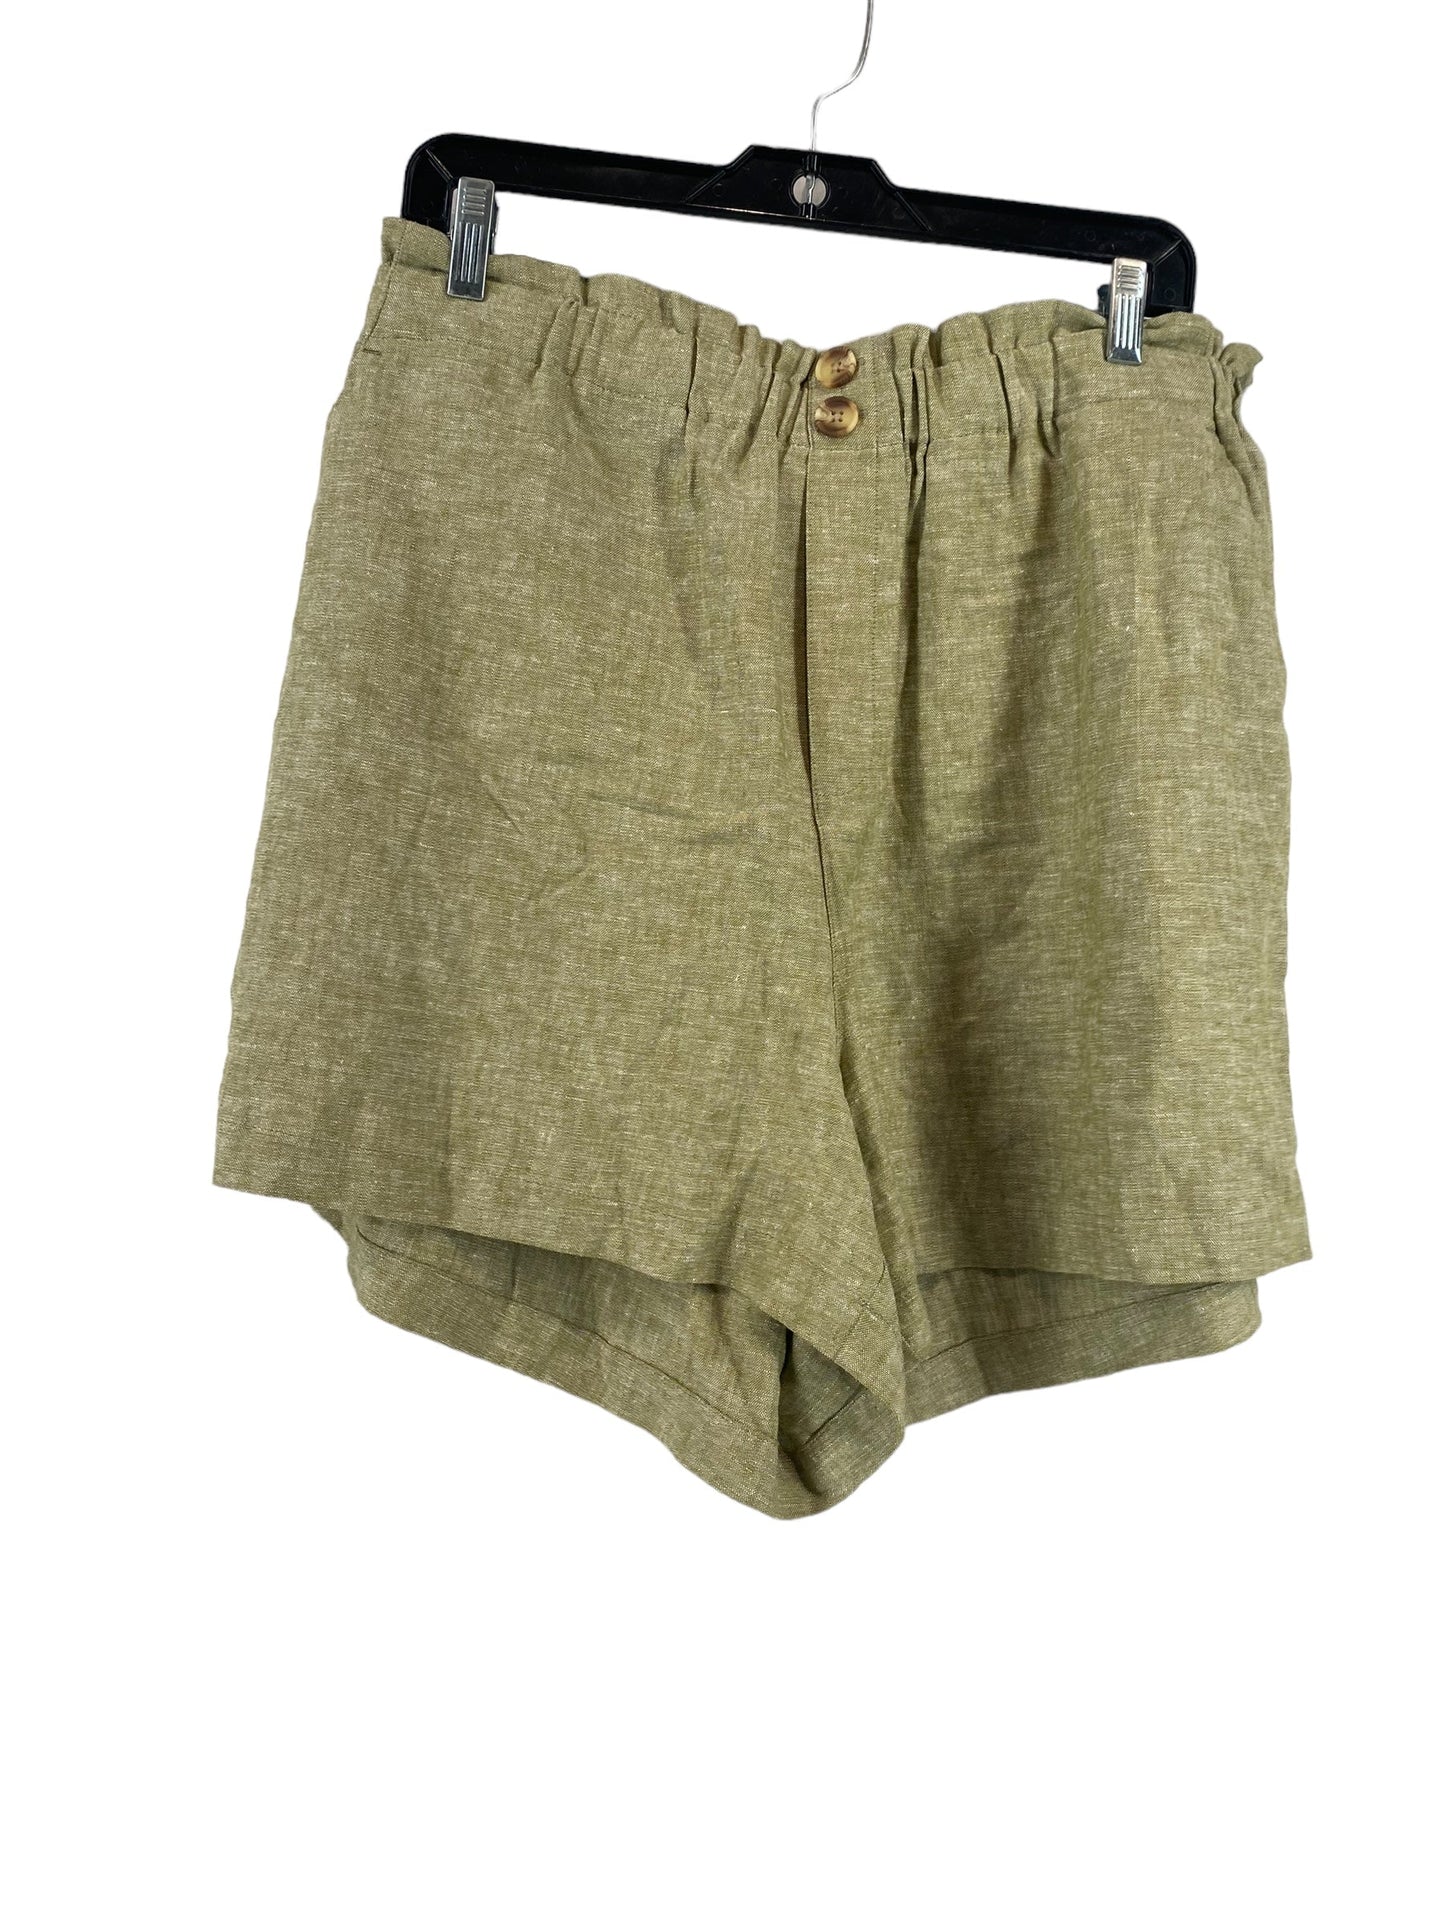 Green Shorts Ava & Viv, Size Xl